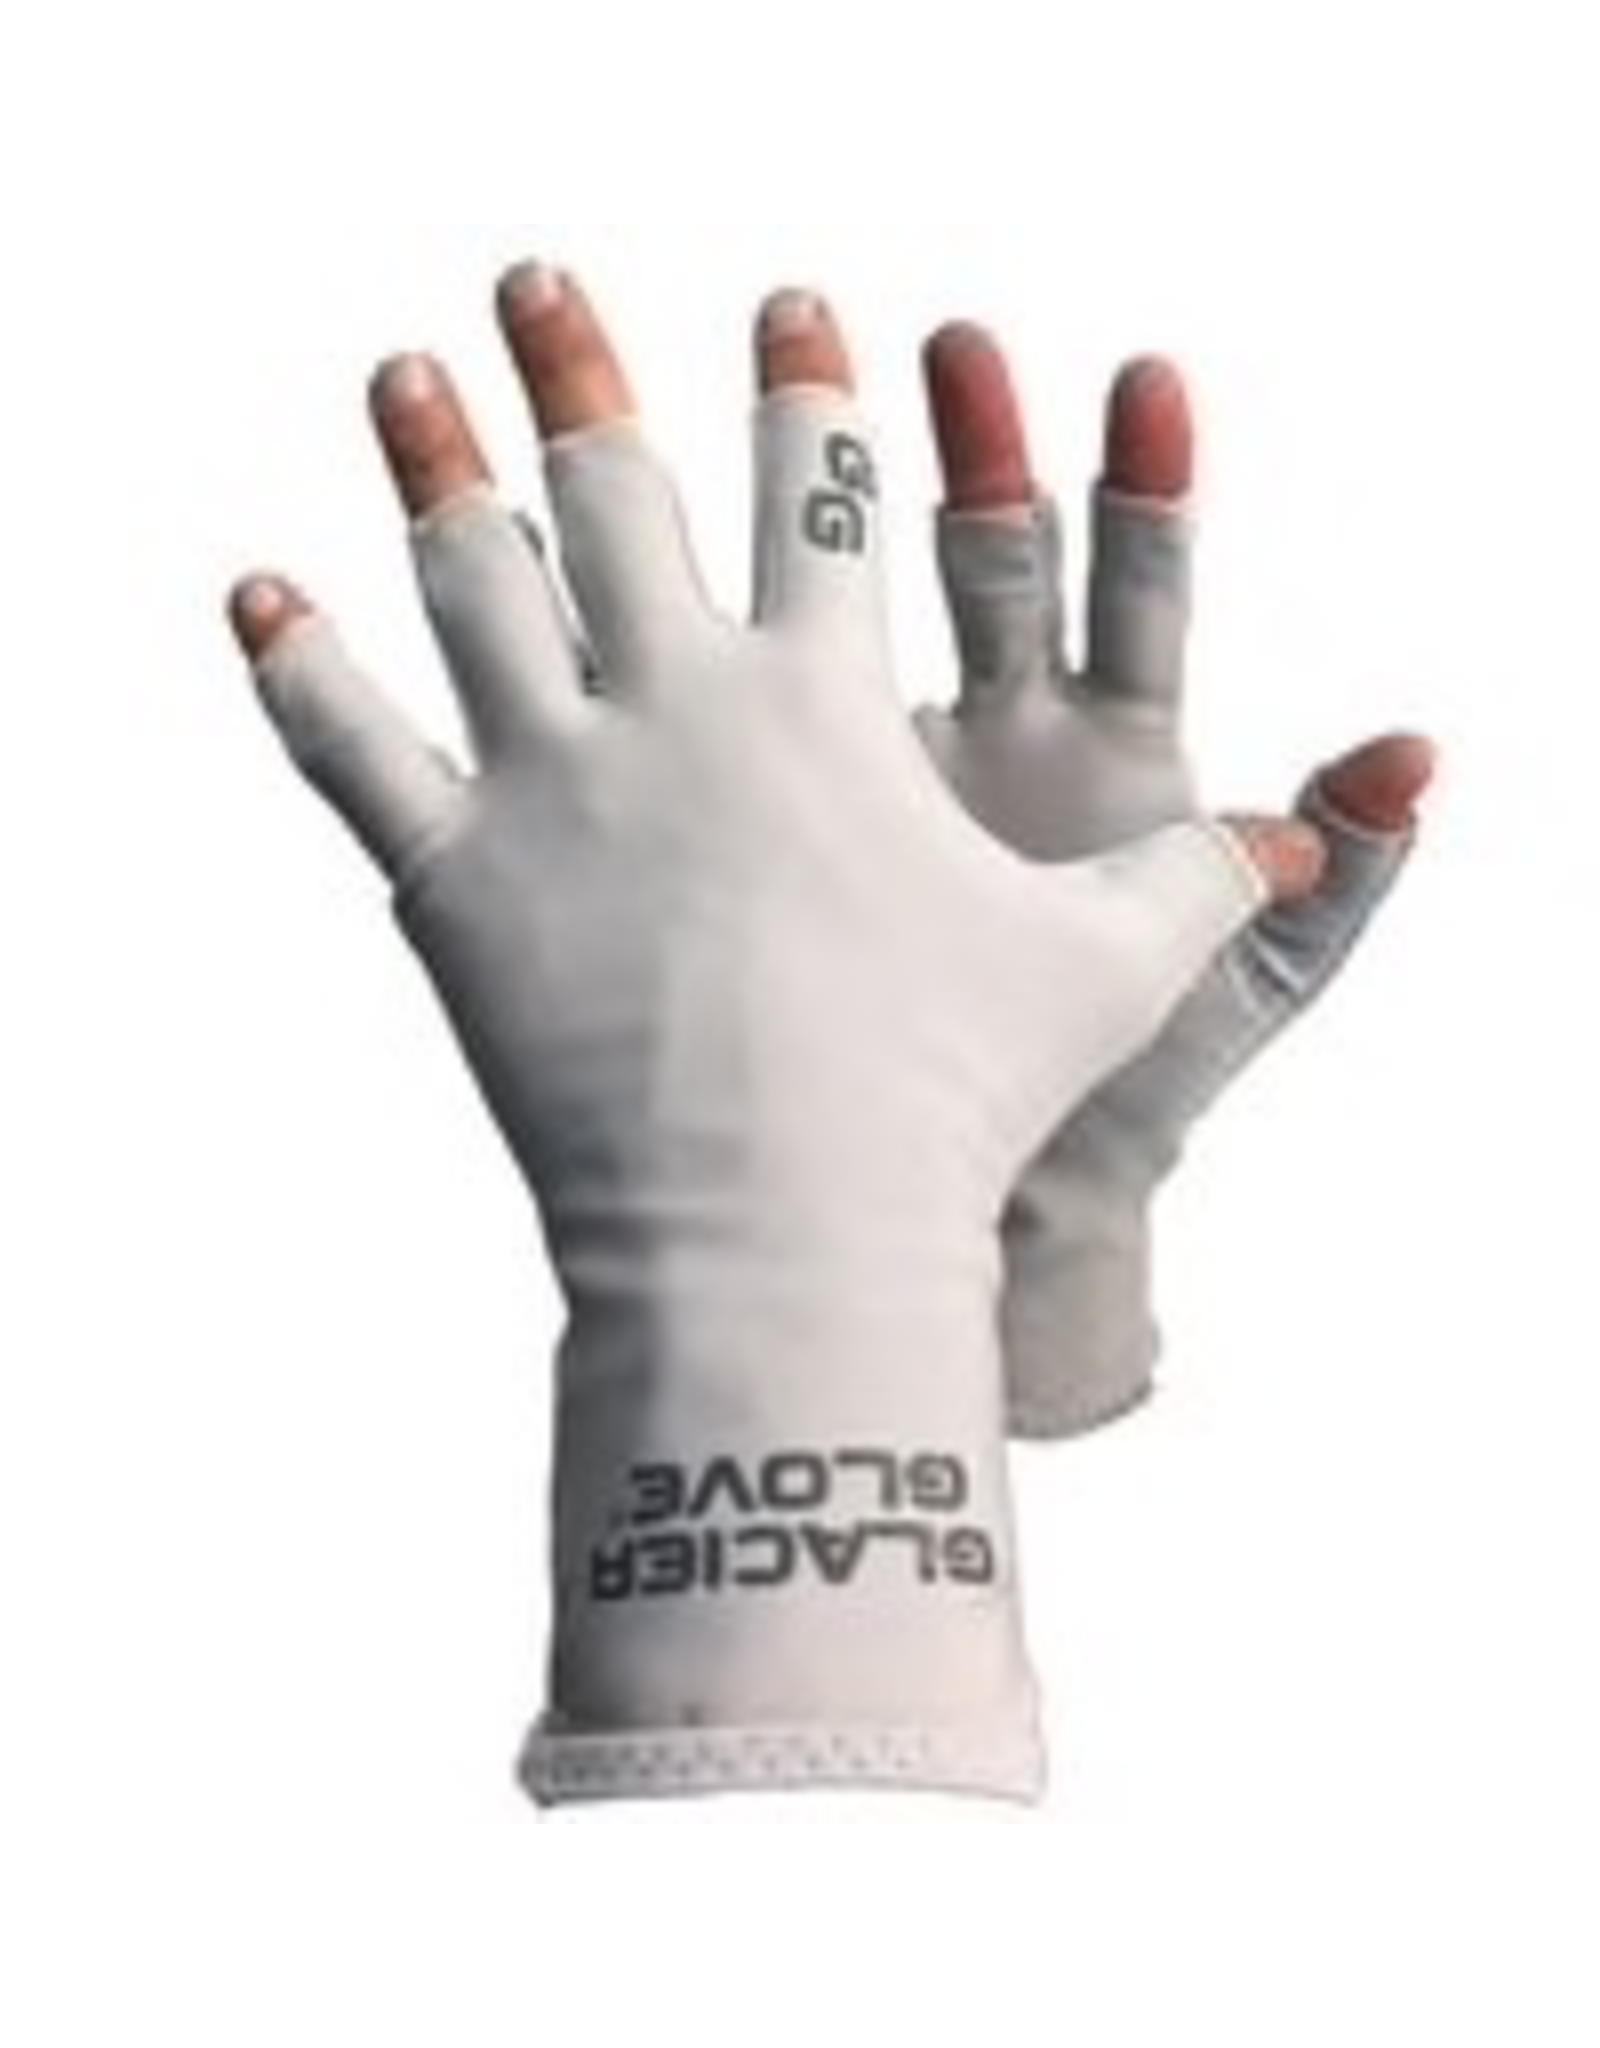 https://cdn.shoplightspeed.com/shops/640402/files/27072500/1600x2048x2/glacier-glove-glacier-glove-abaco-bay-sun-gloves-g.jpg